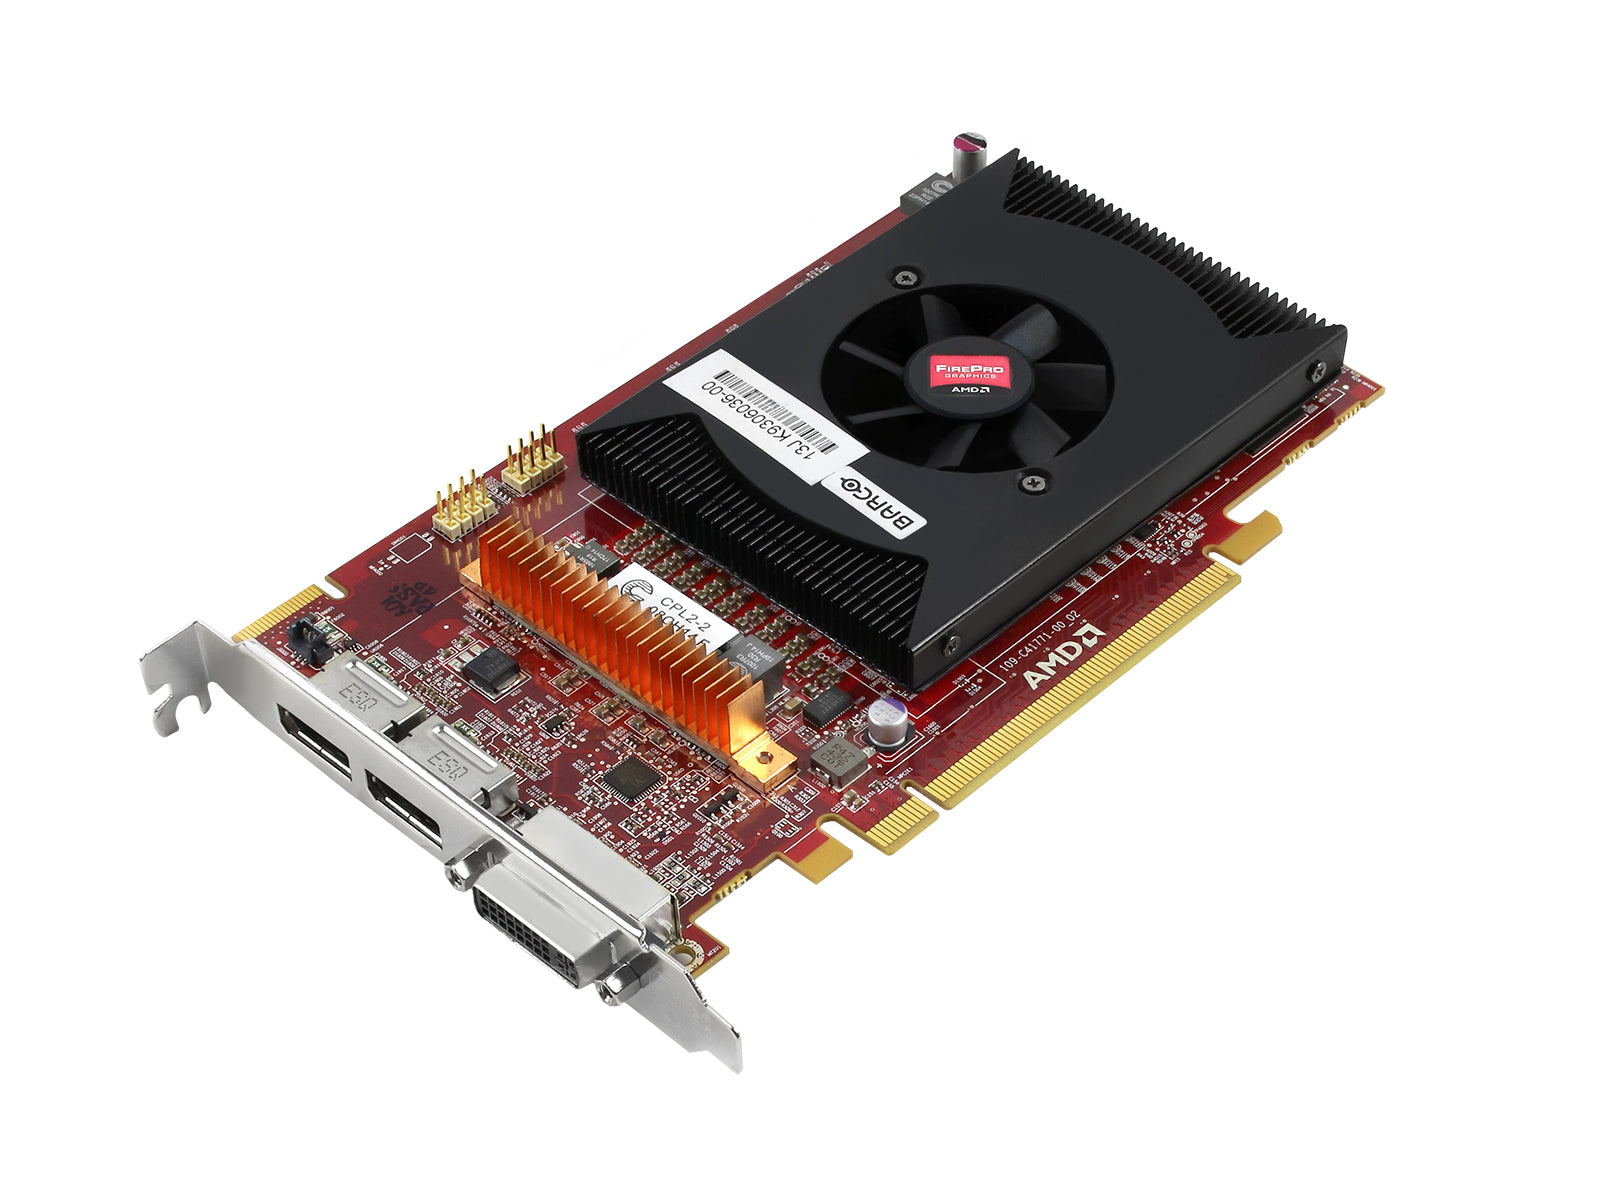 Barco MXRT-5500 2GB PCIe トリプル ヘッド グラフィック カード (K9306036) Monitors.com